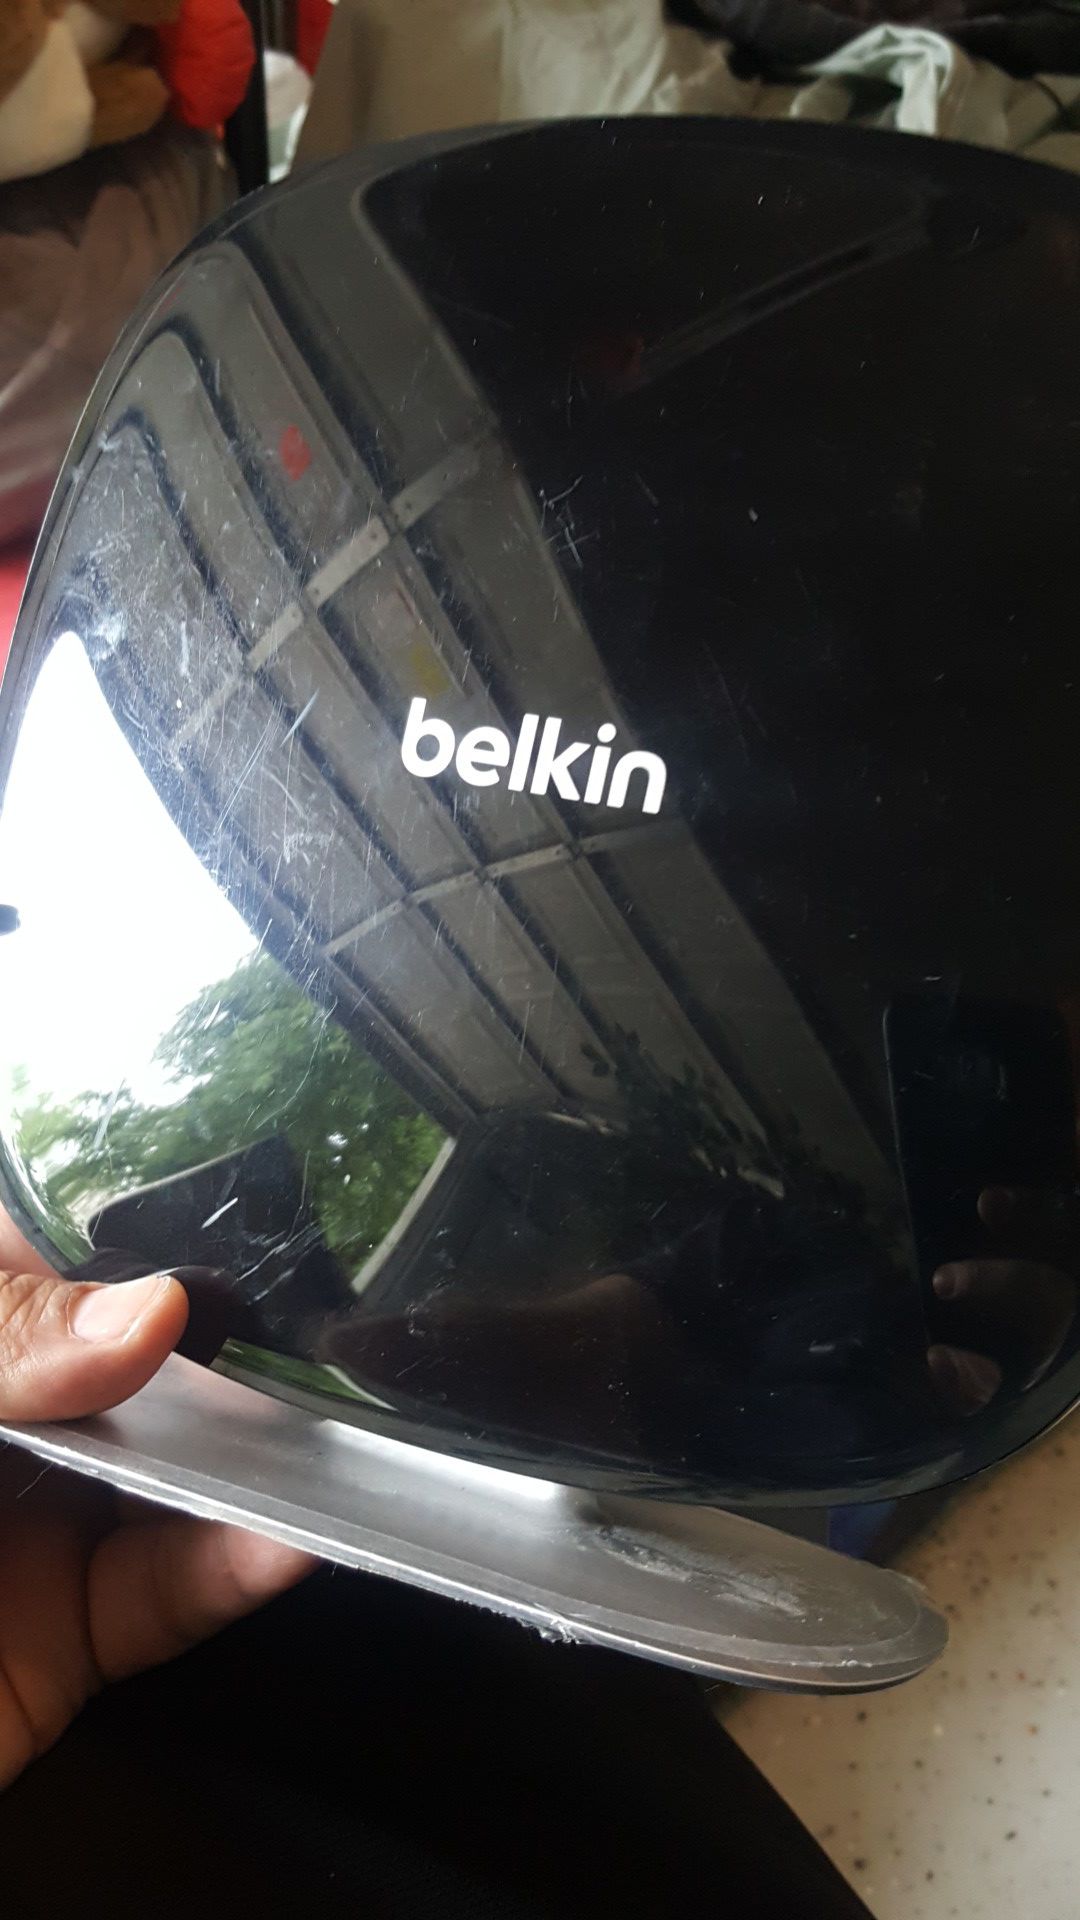 Belkin AC1200 DB Wi-Fi Dual Band AC+ Router